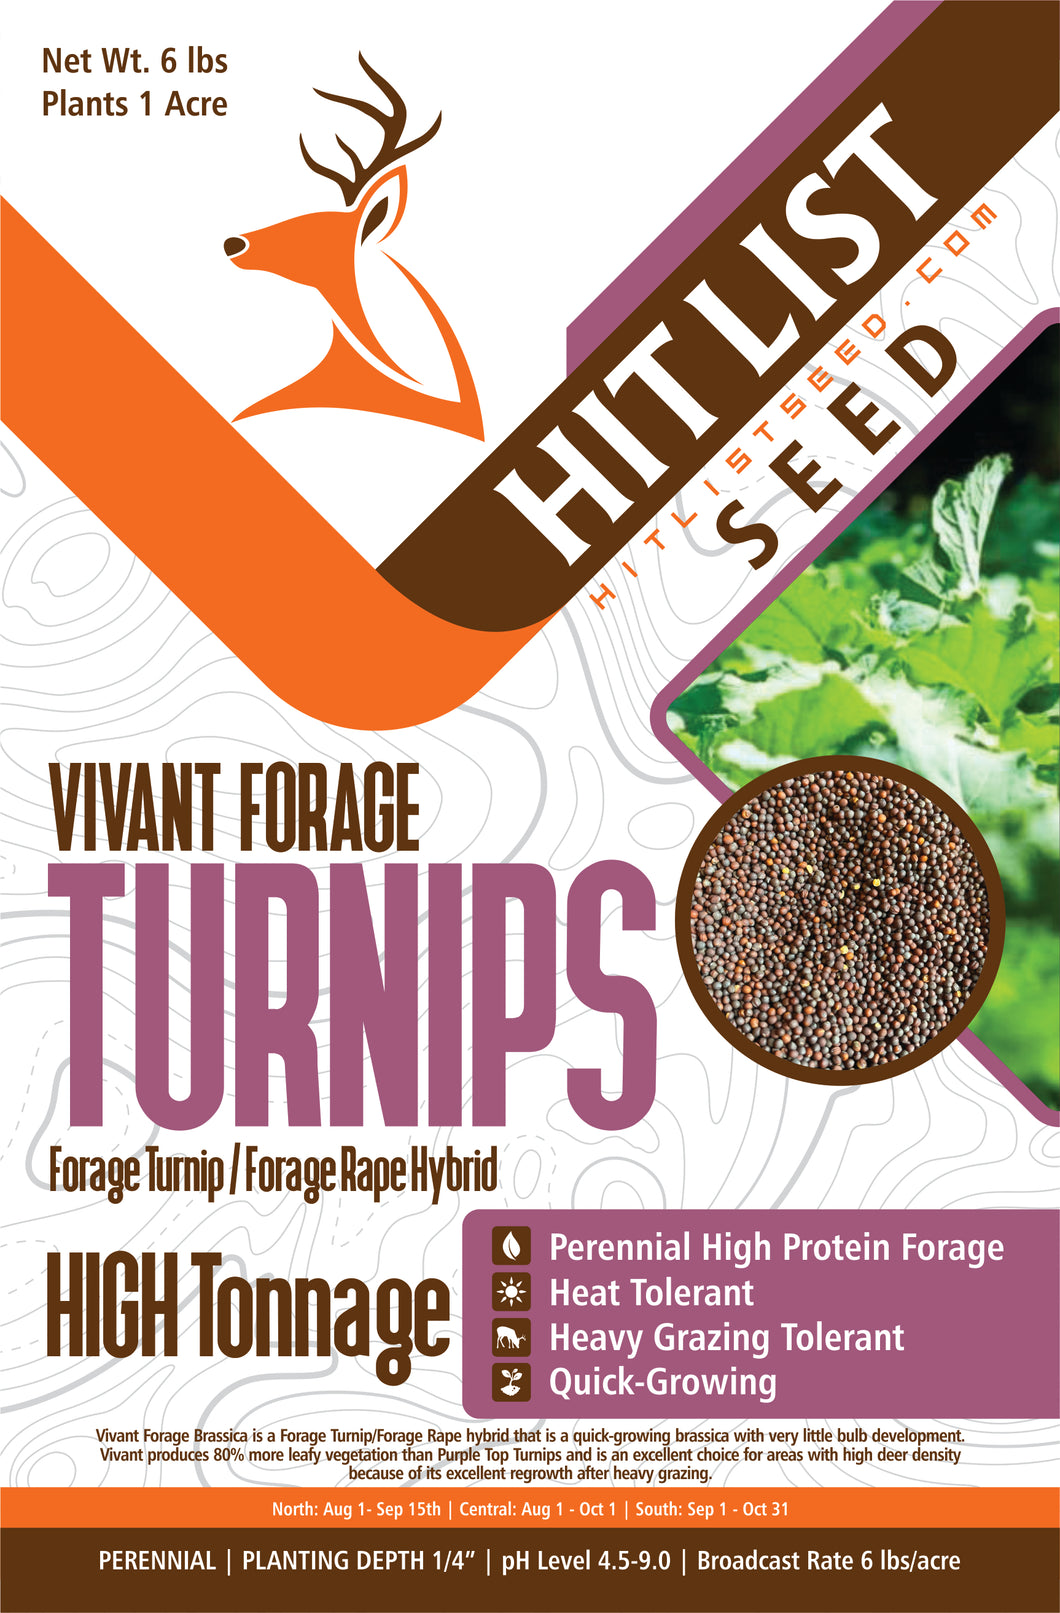 Vivant Hybrid Turnip Forage Brassica